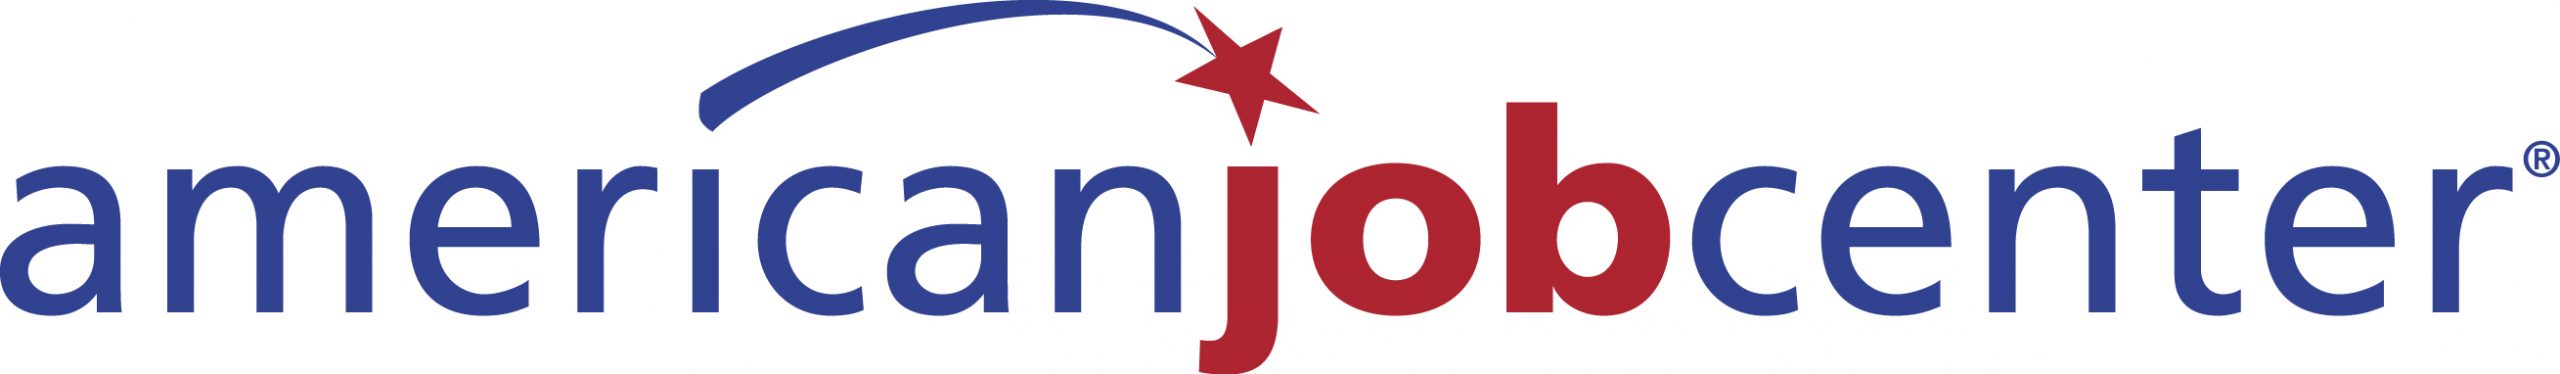 American job center logo